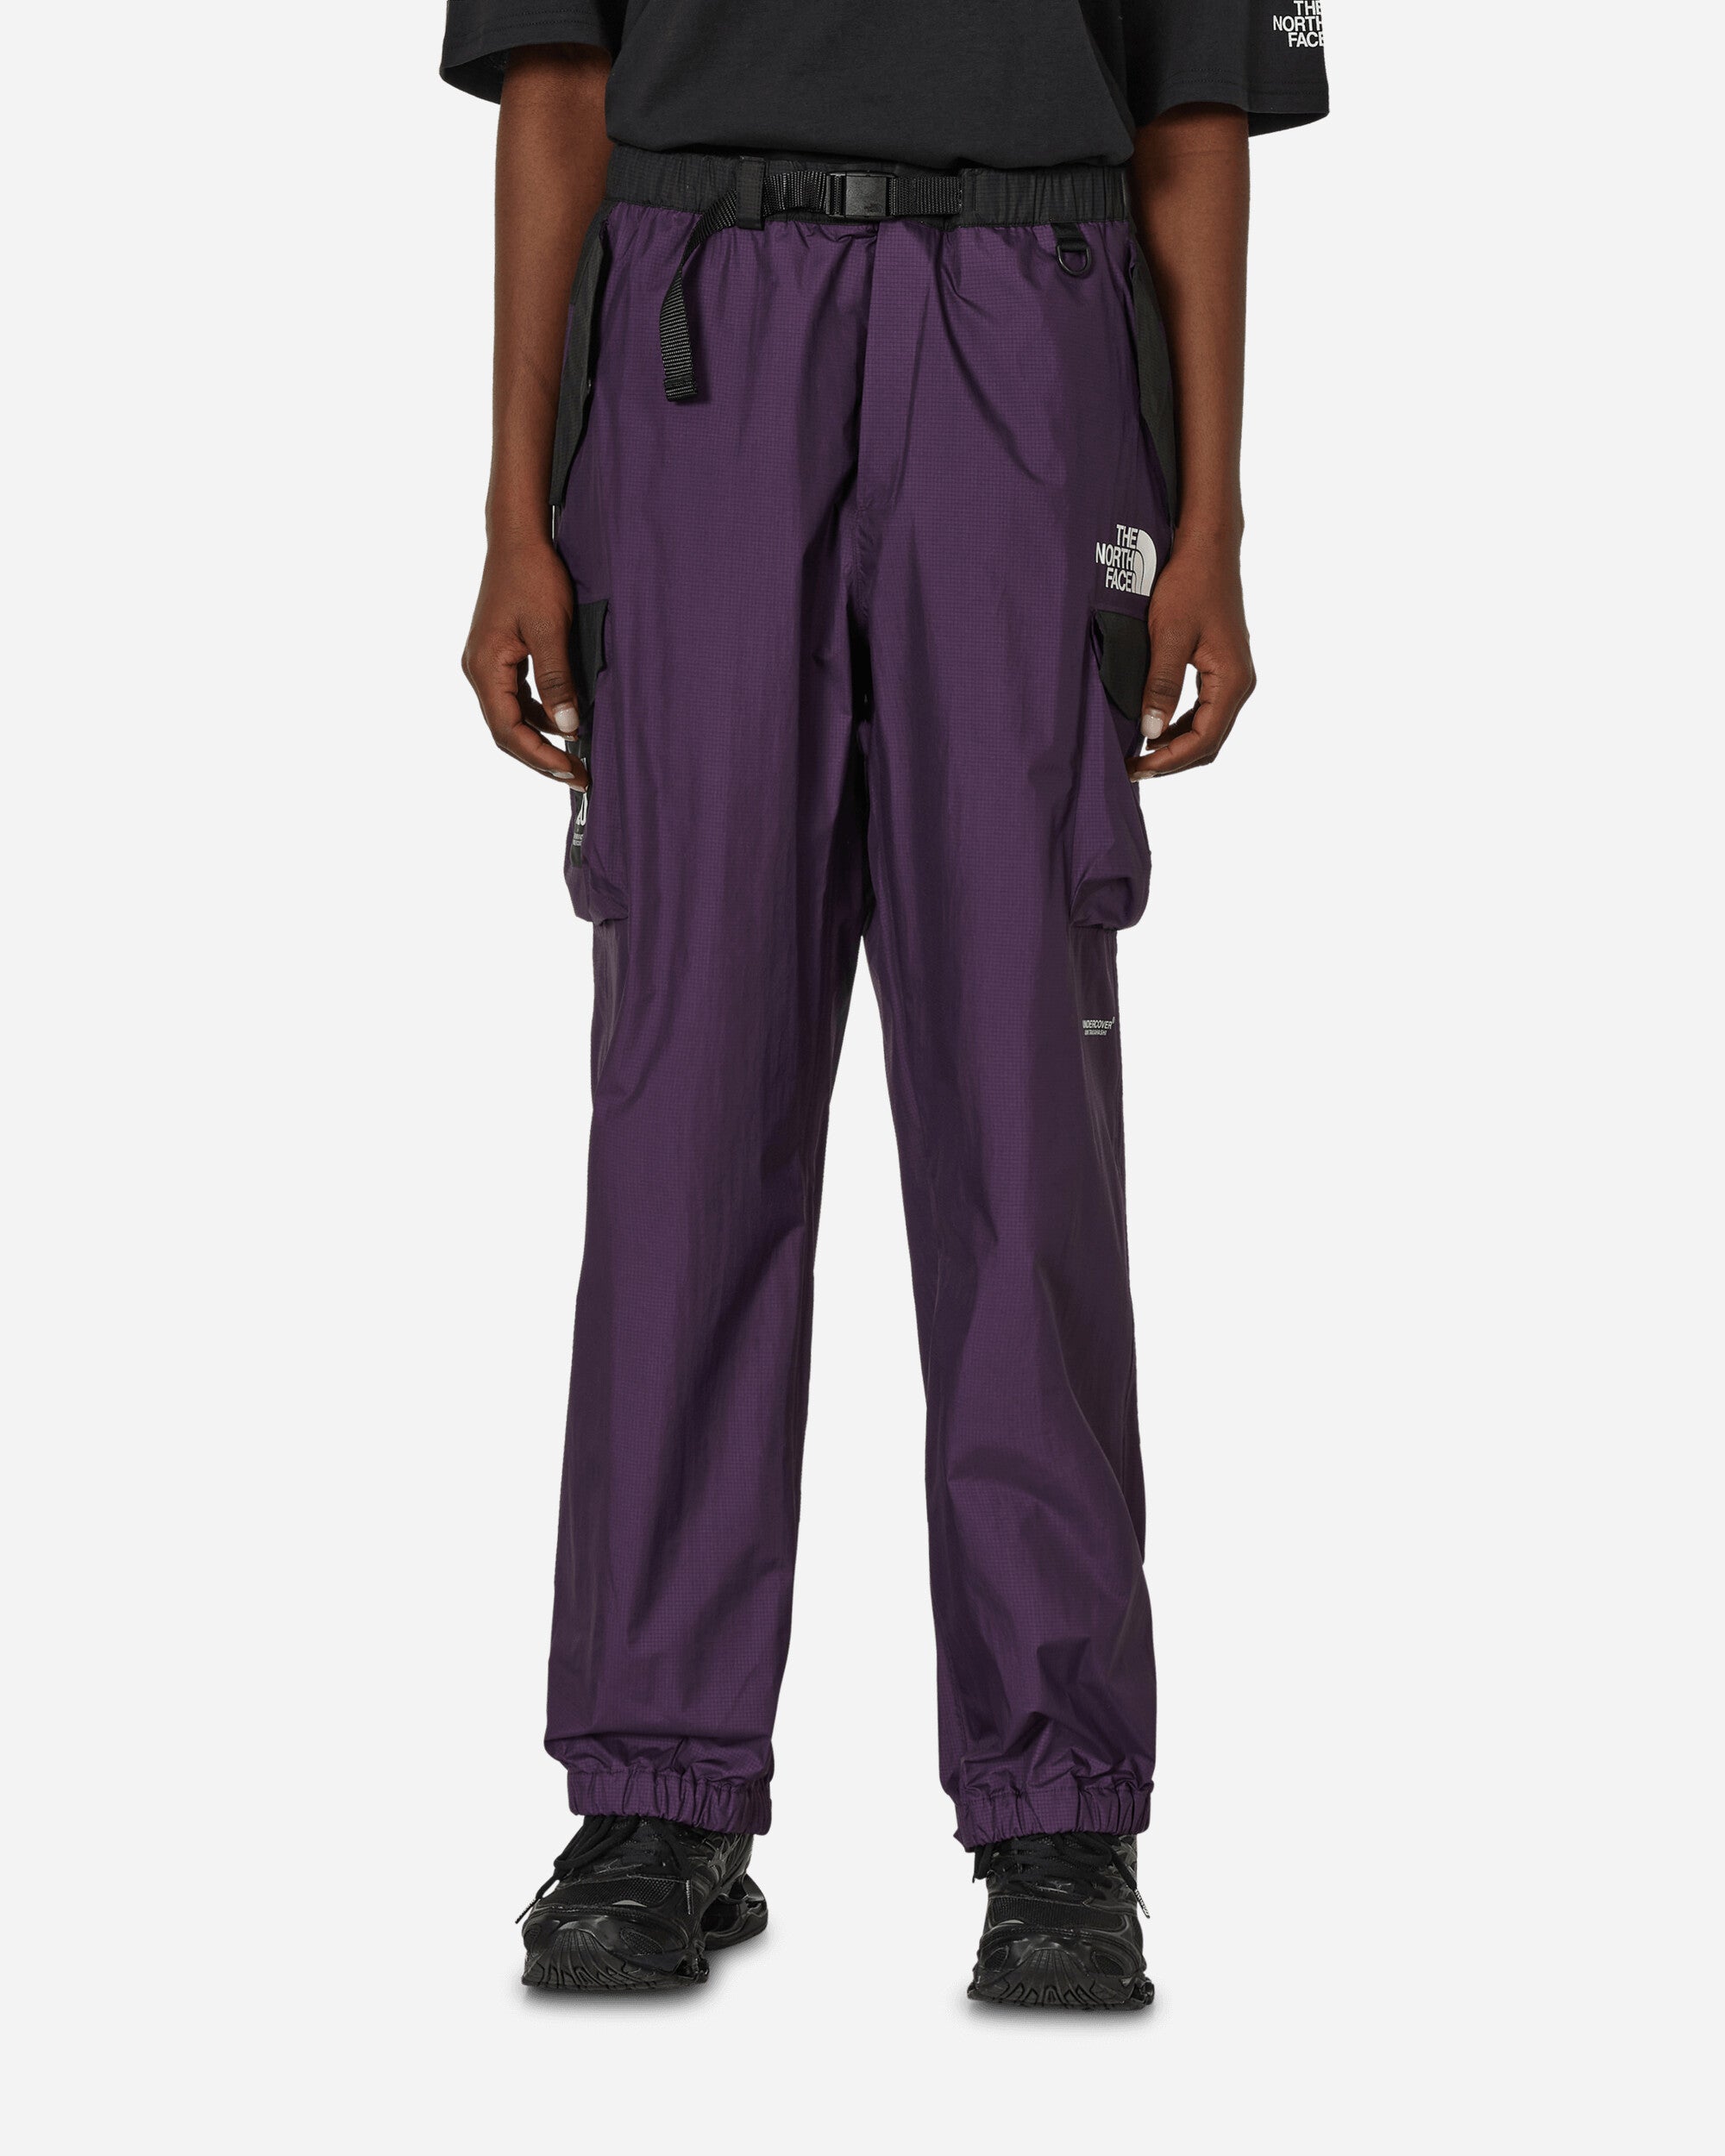 $150 Men's S Nike Jordan 23 Engineered Convertible Track Pants Shorts  CV2788 | eBay